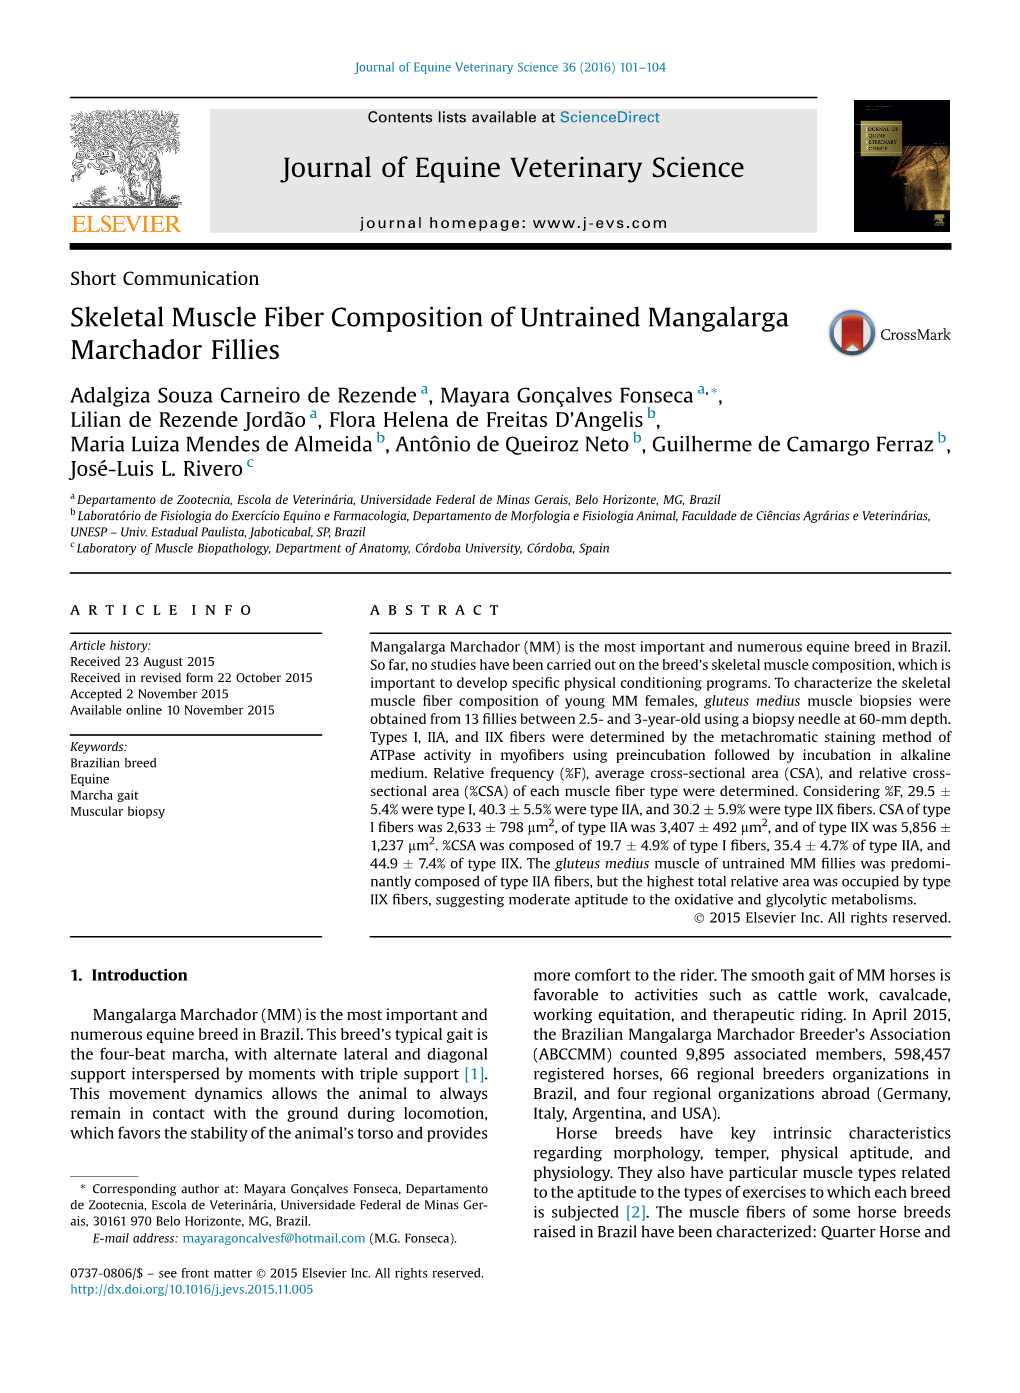 Skeletal Muscle Fiber Composition of Untrained Mangalarga Marchador Fillies